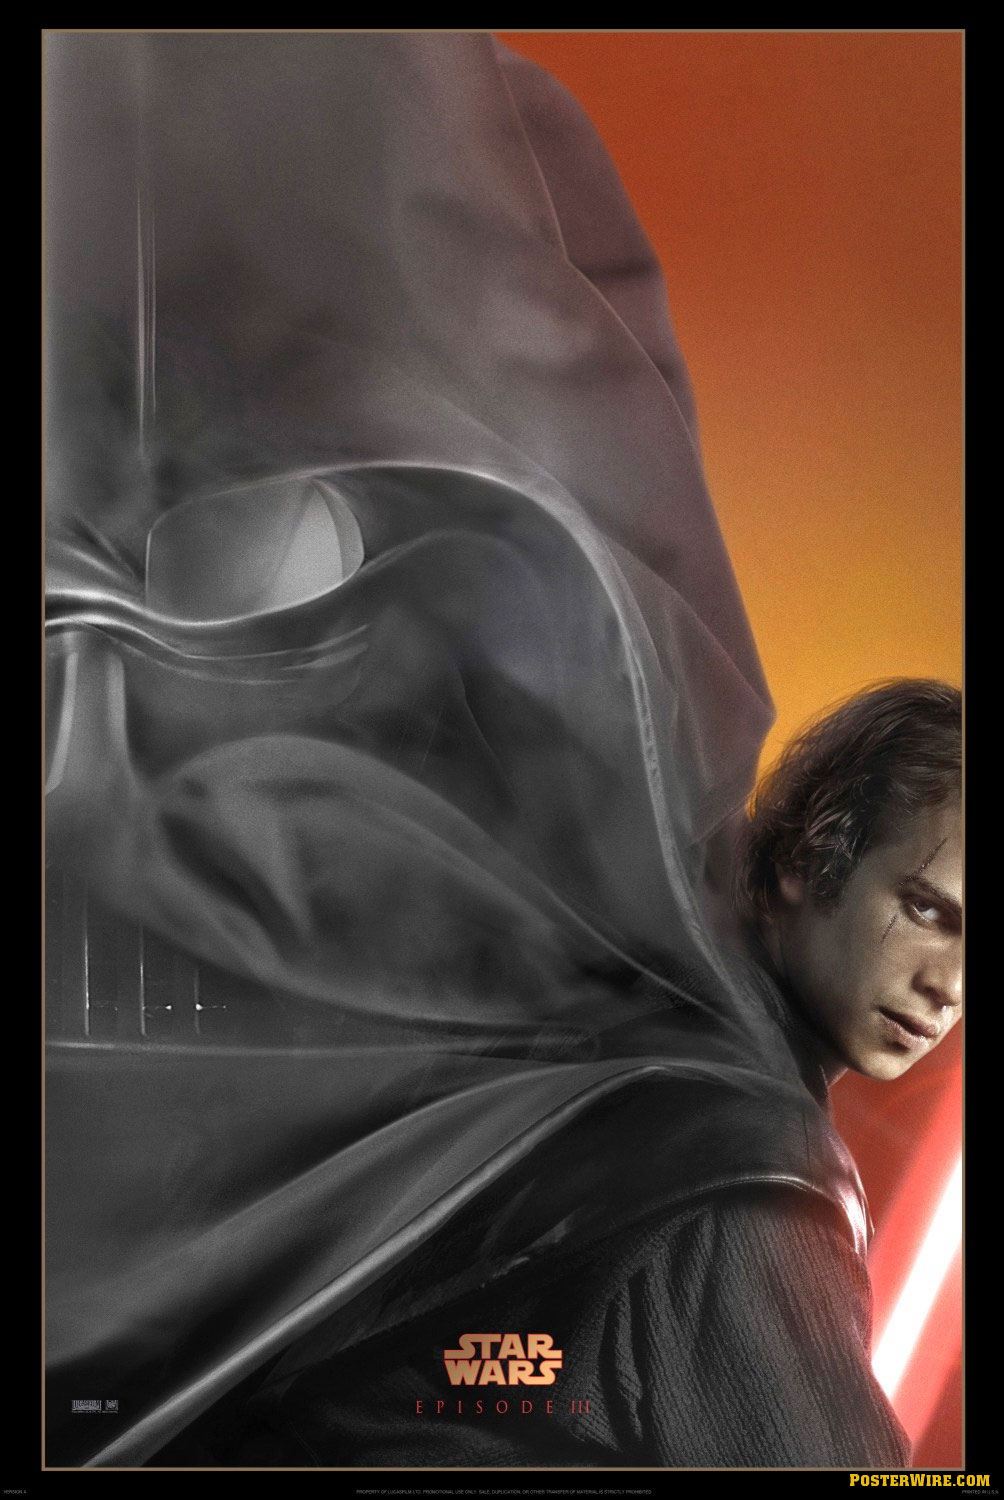 Star Wars Episode 3 Revenge of the Sith teaser poster